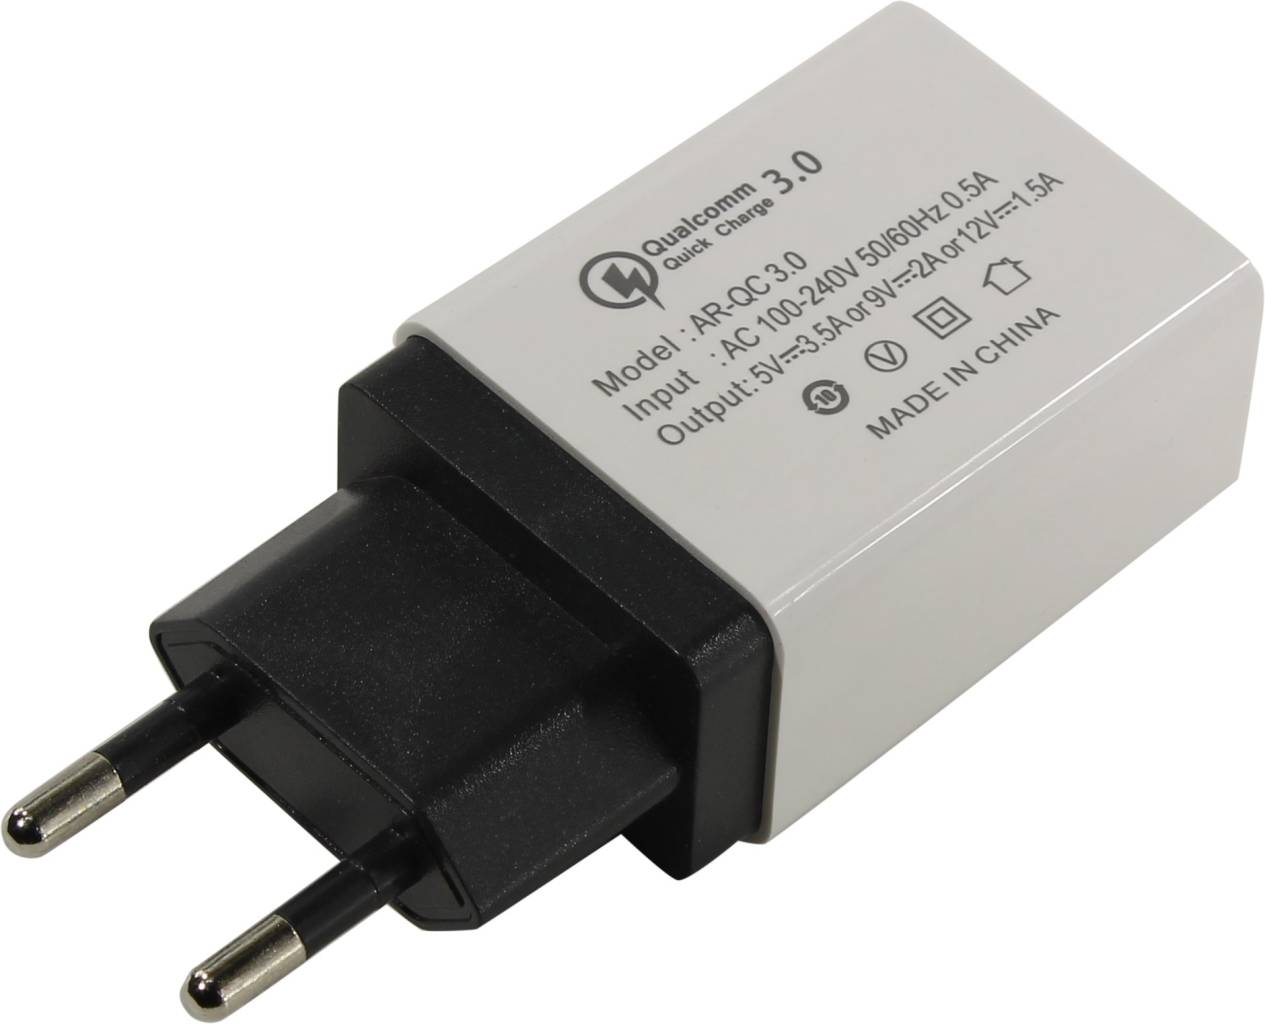  Greenconnect [GCR-1P35AUSB] -  USB (.AC100-240V, . DC5V/9V/12V, USB 3.5A)